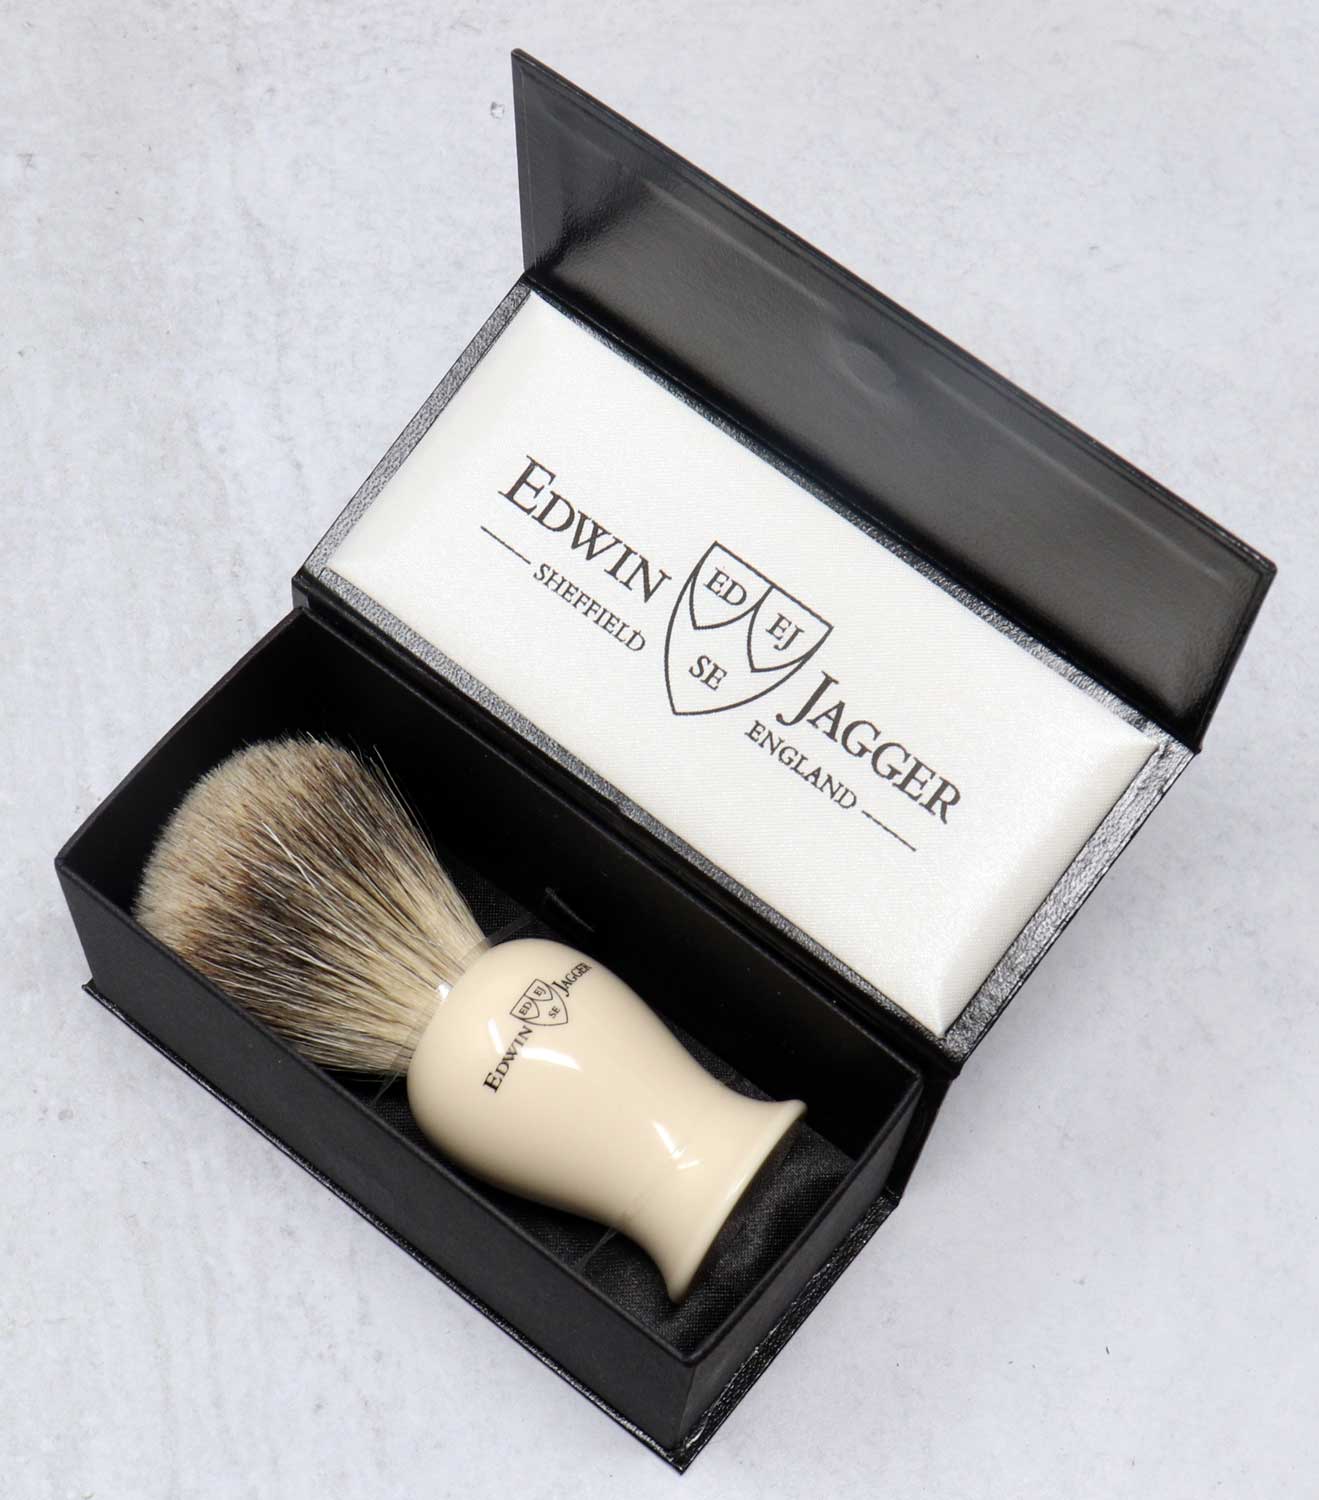 Edwin Jagger Imitation Ivory Plaza Shaving Brush- Best Badger